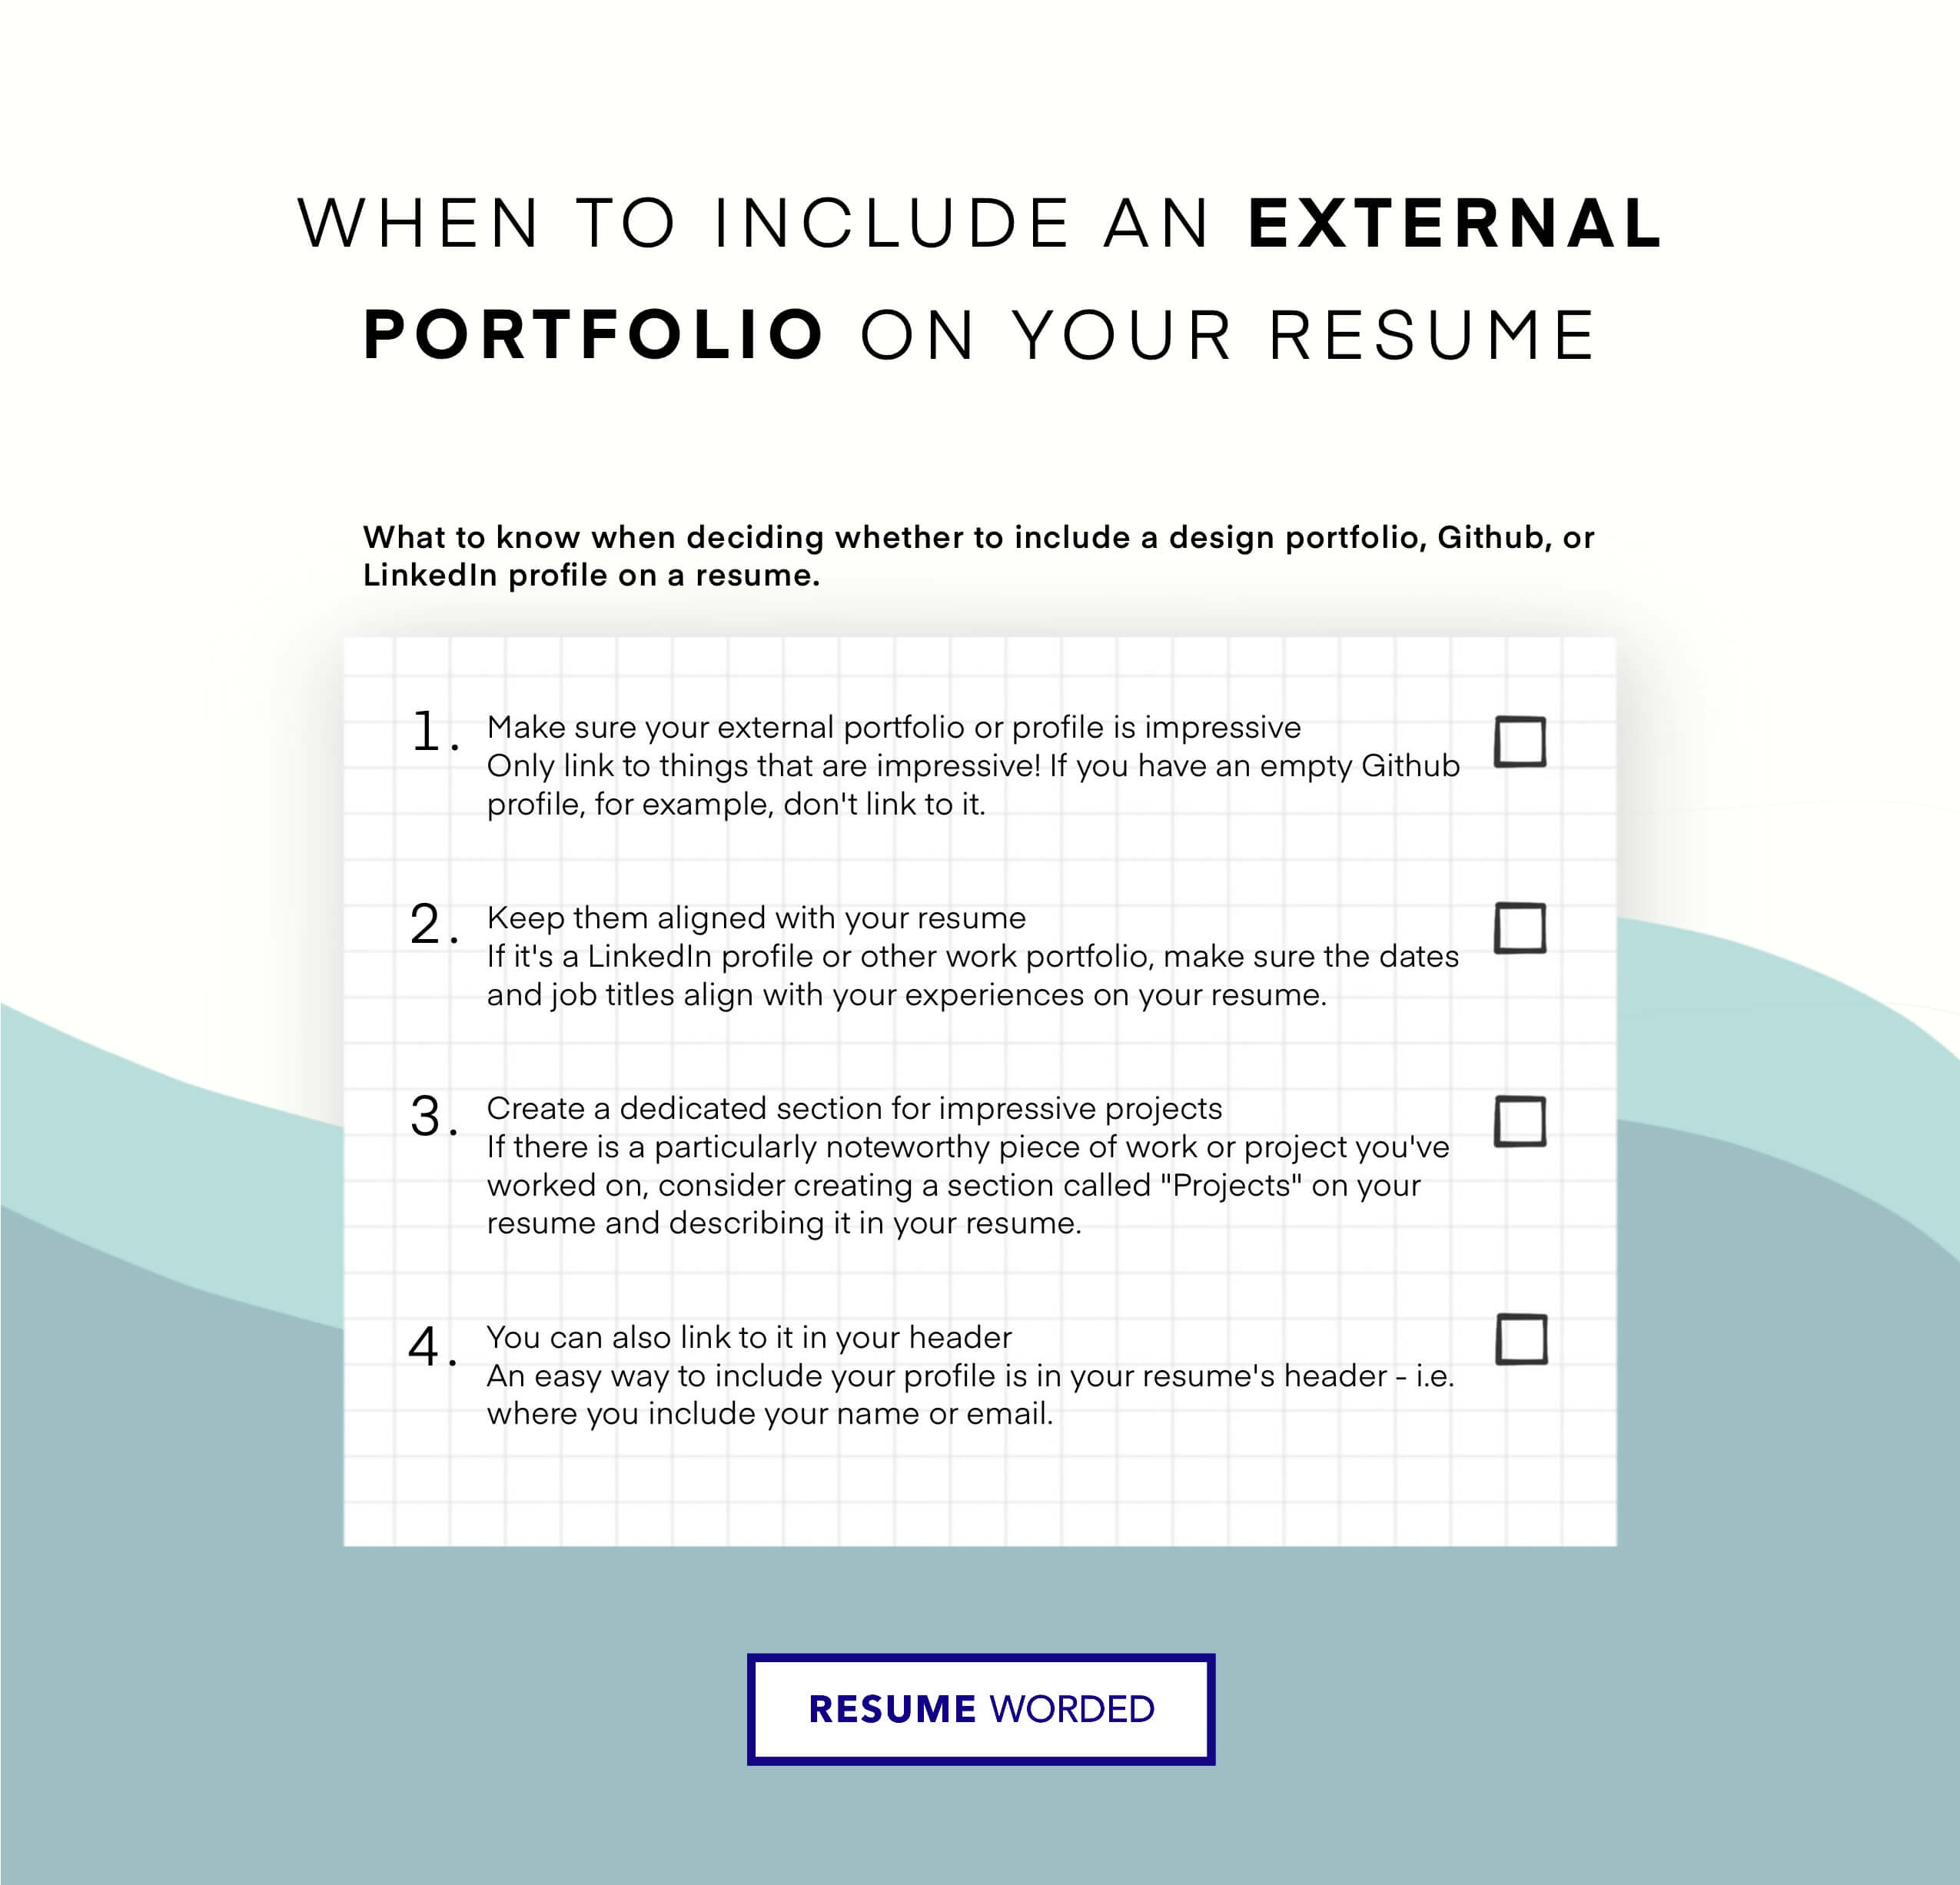 Consider making a portfolio - Content Strategist Resume